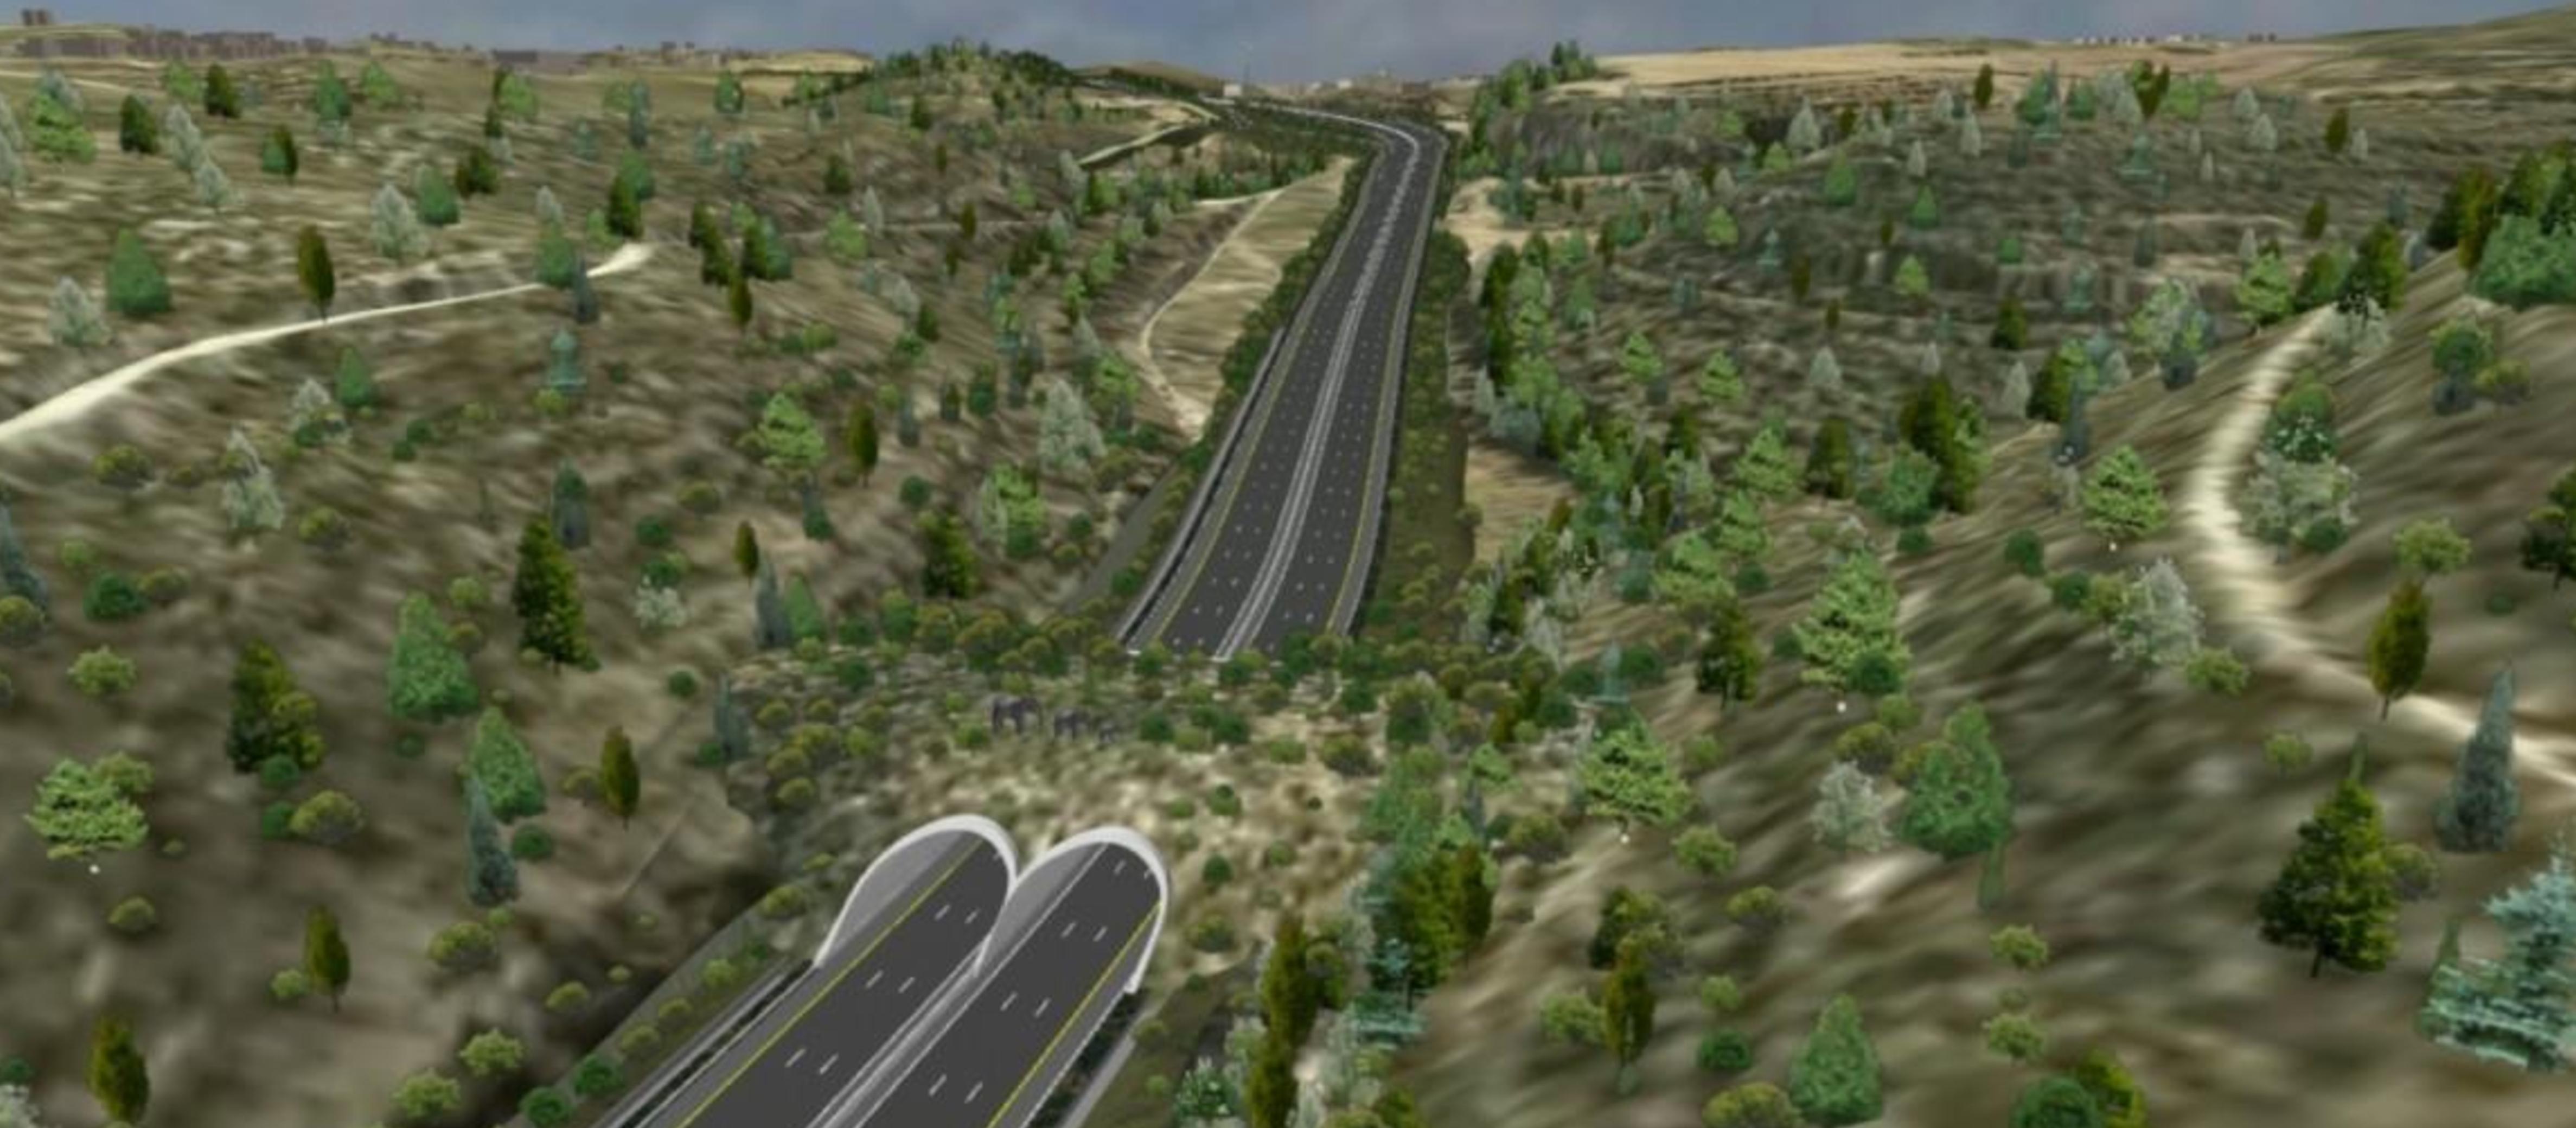 Israel’s new highway helps wildlife cross the road